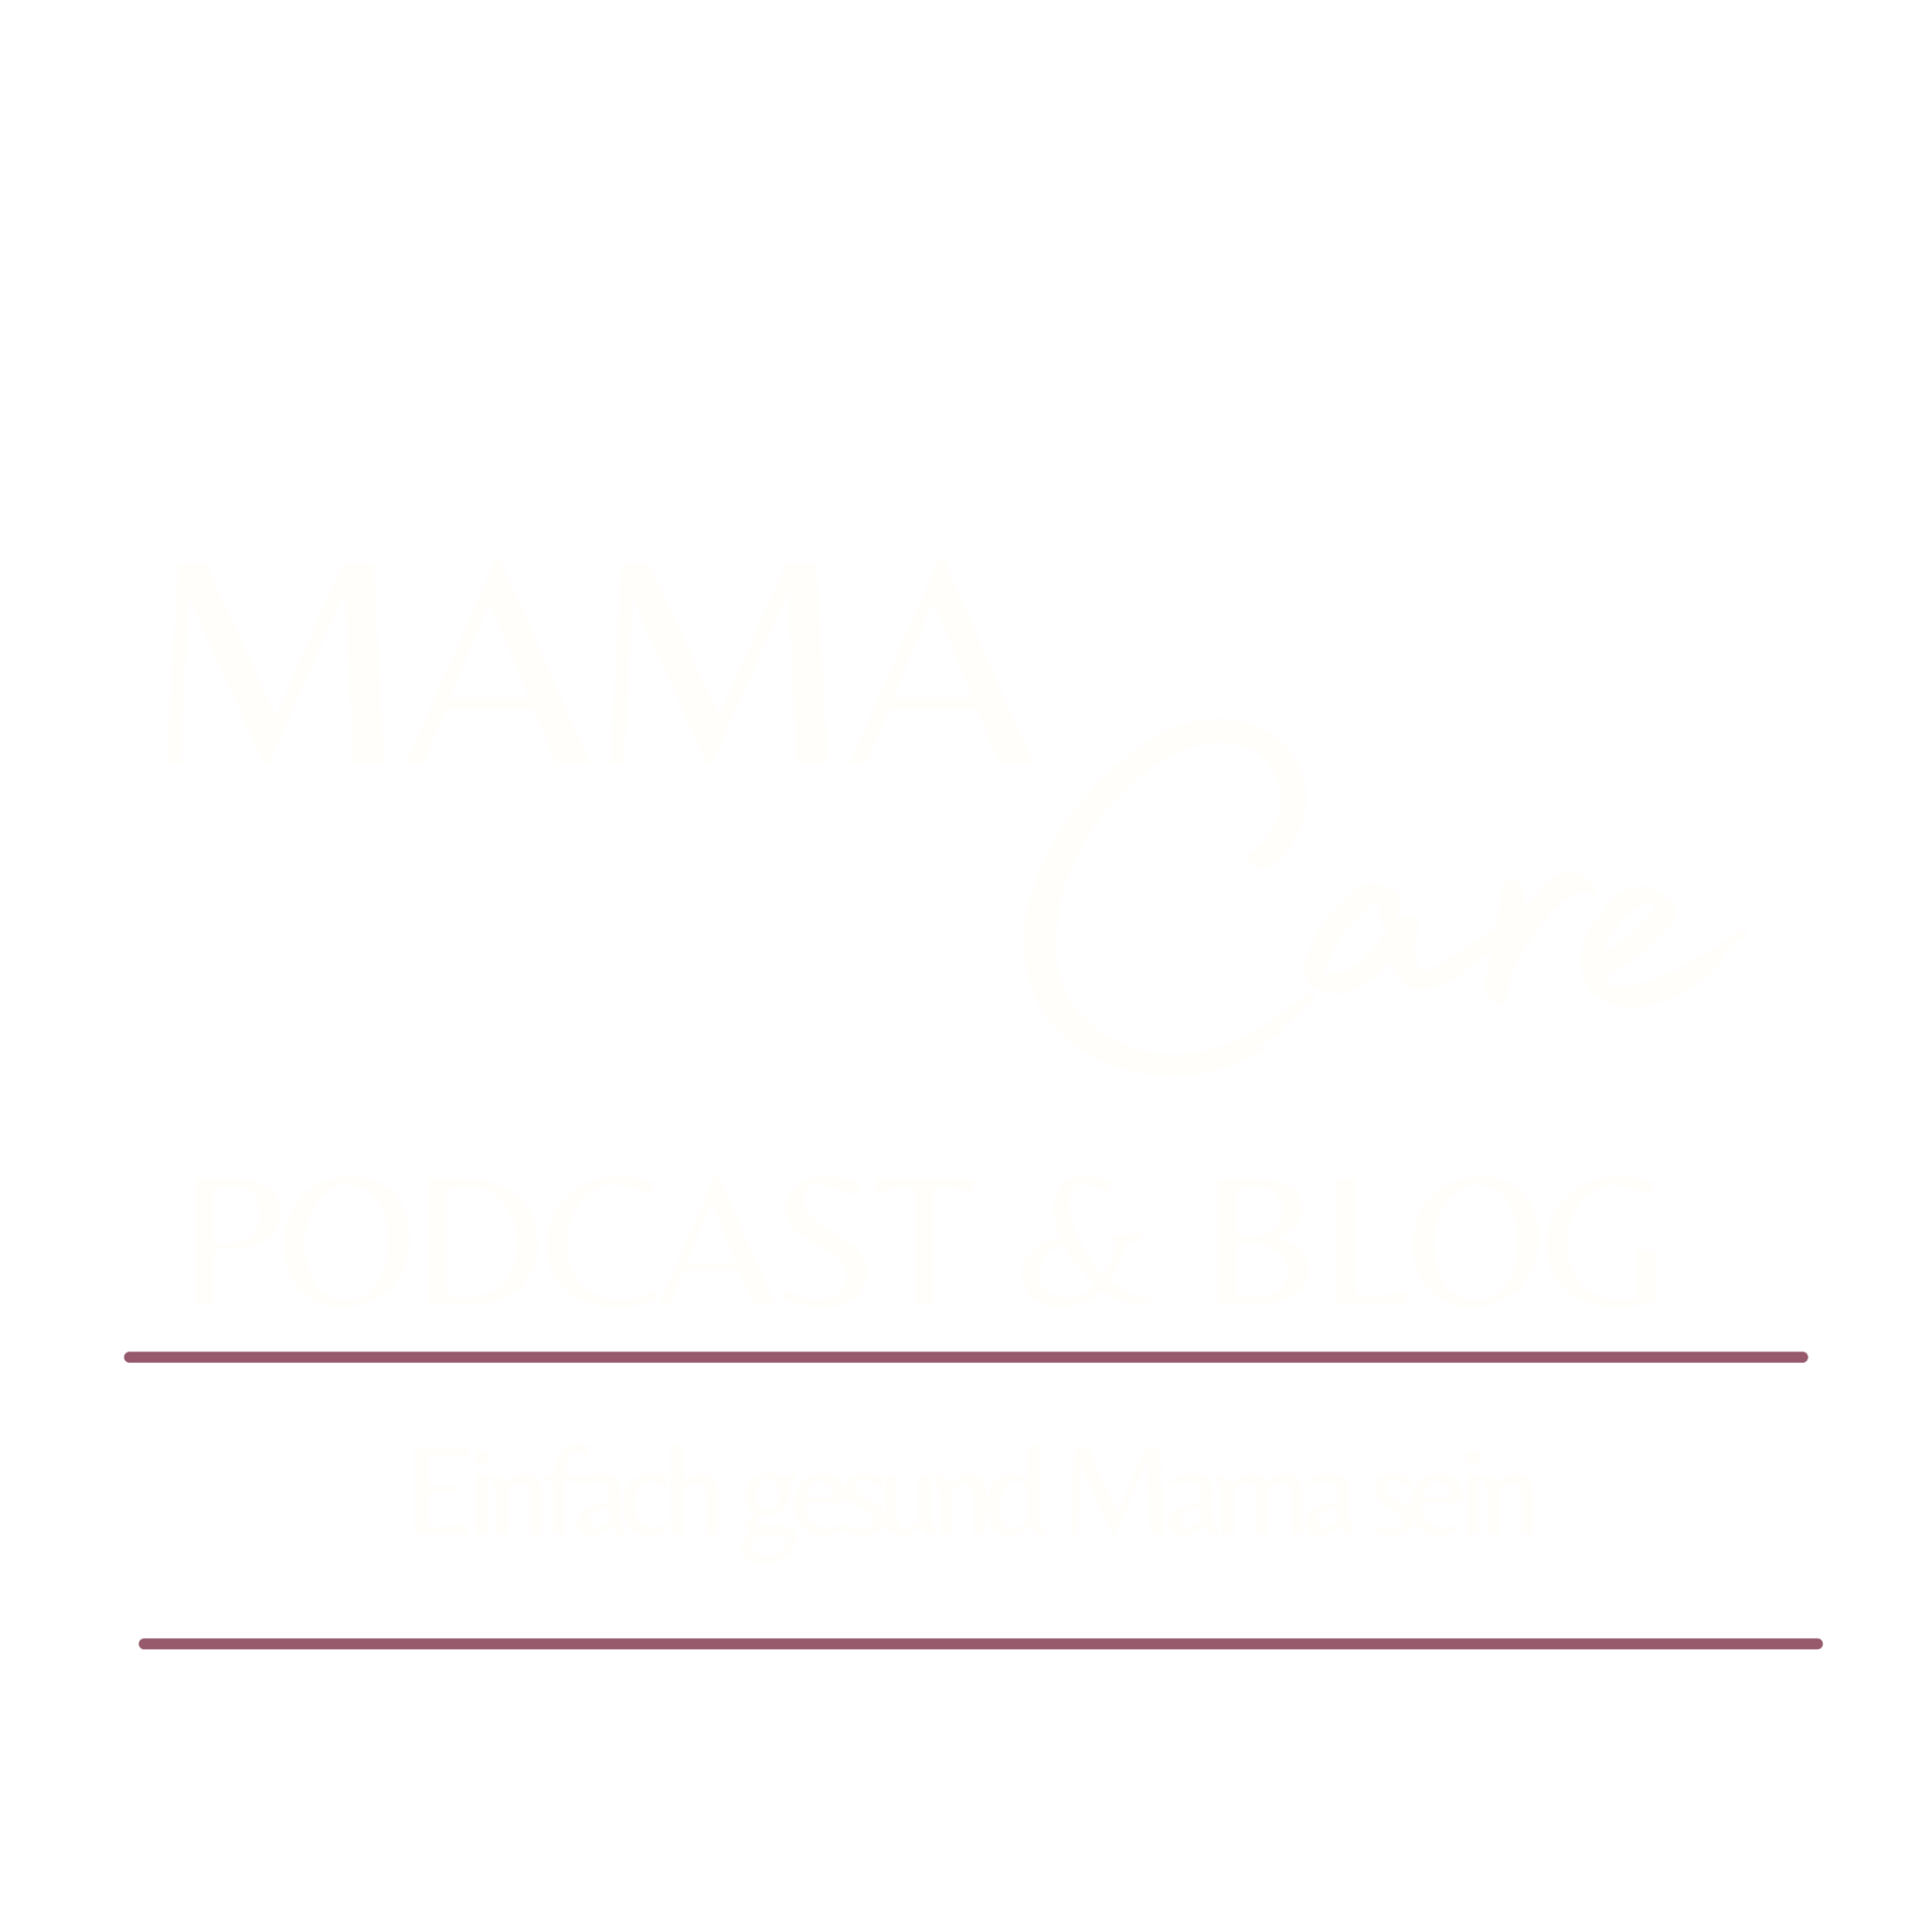 Mama_Care_Podcast_Blog_Heading